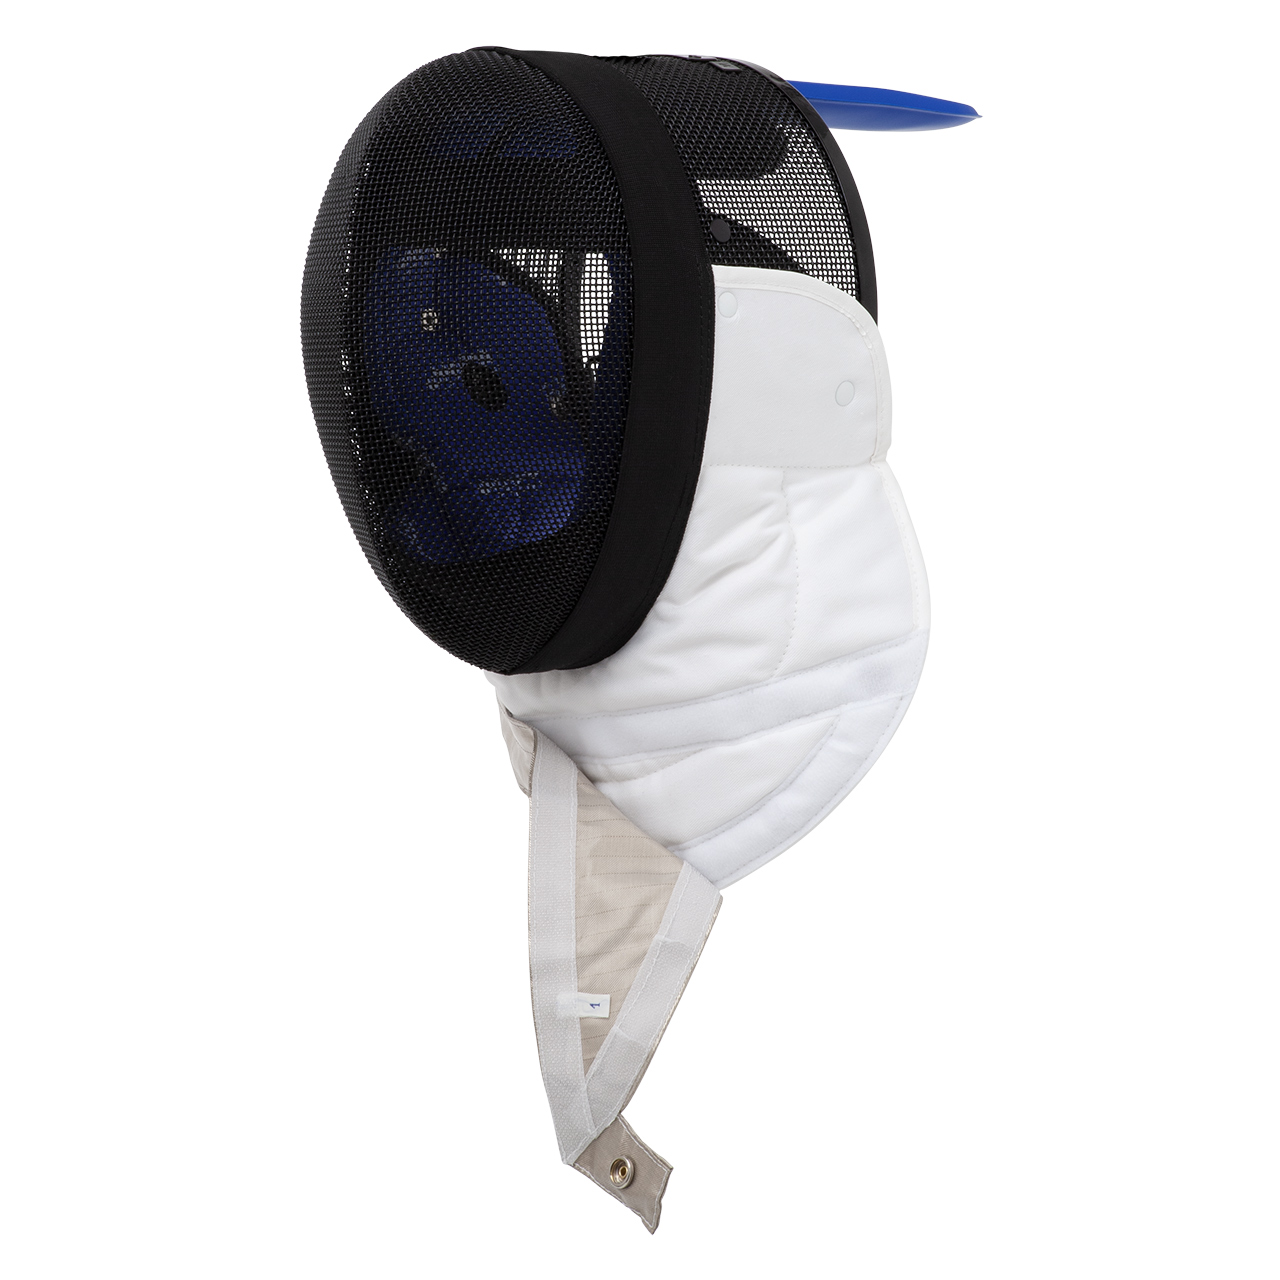 FIE Vario mask 1600N LIGHT "EXTRA", with detachable conductive bib